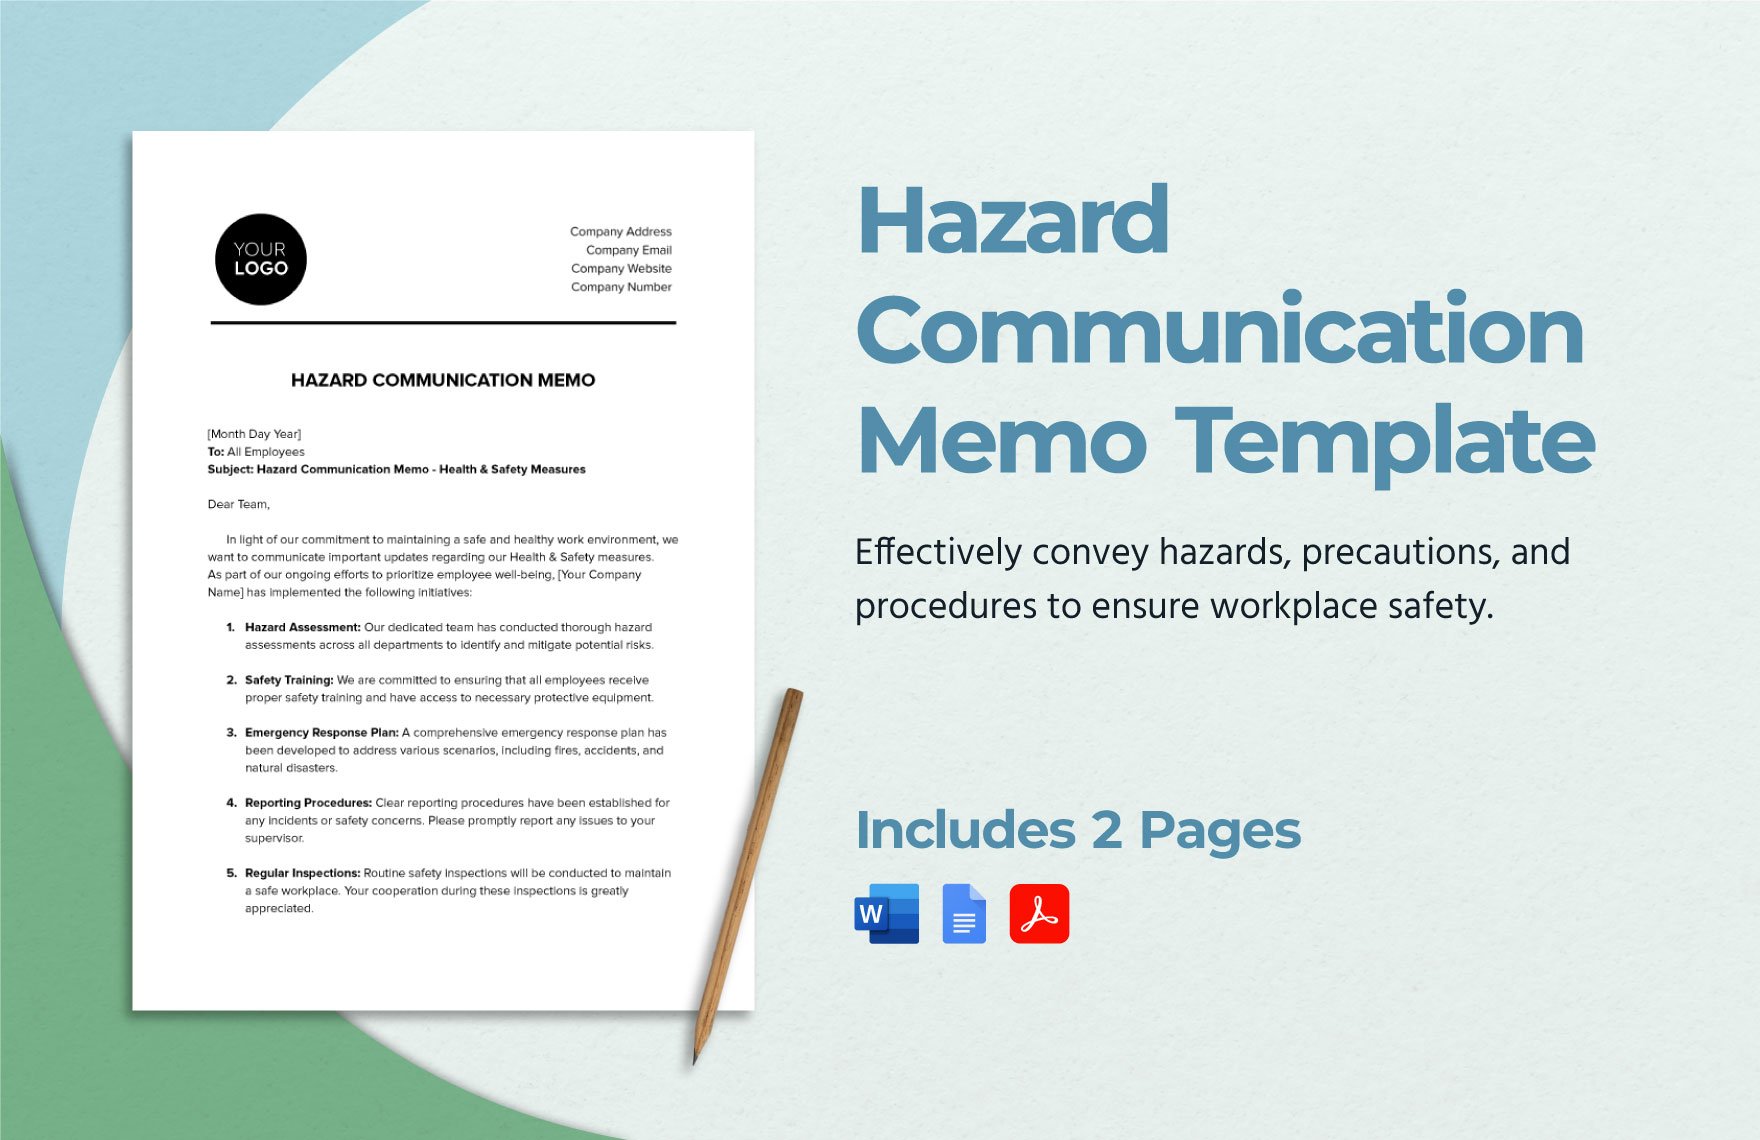 Hazard Communication Memo Template